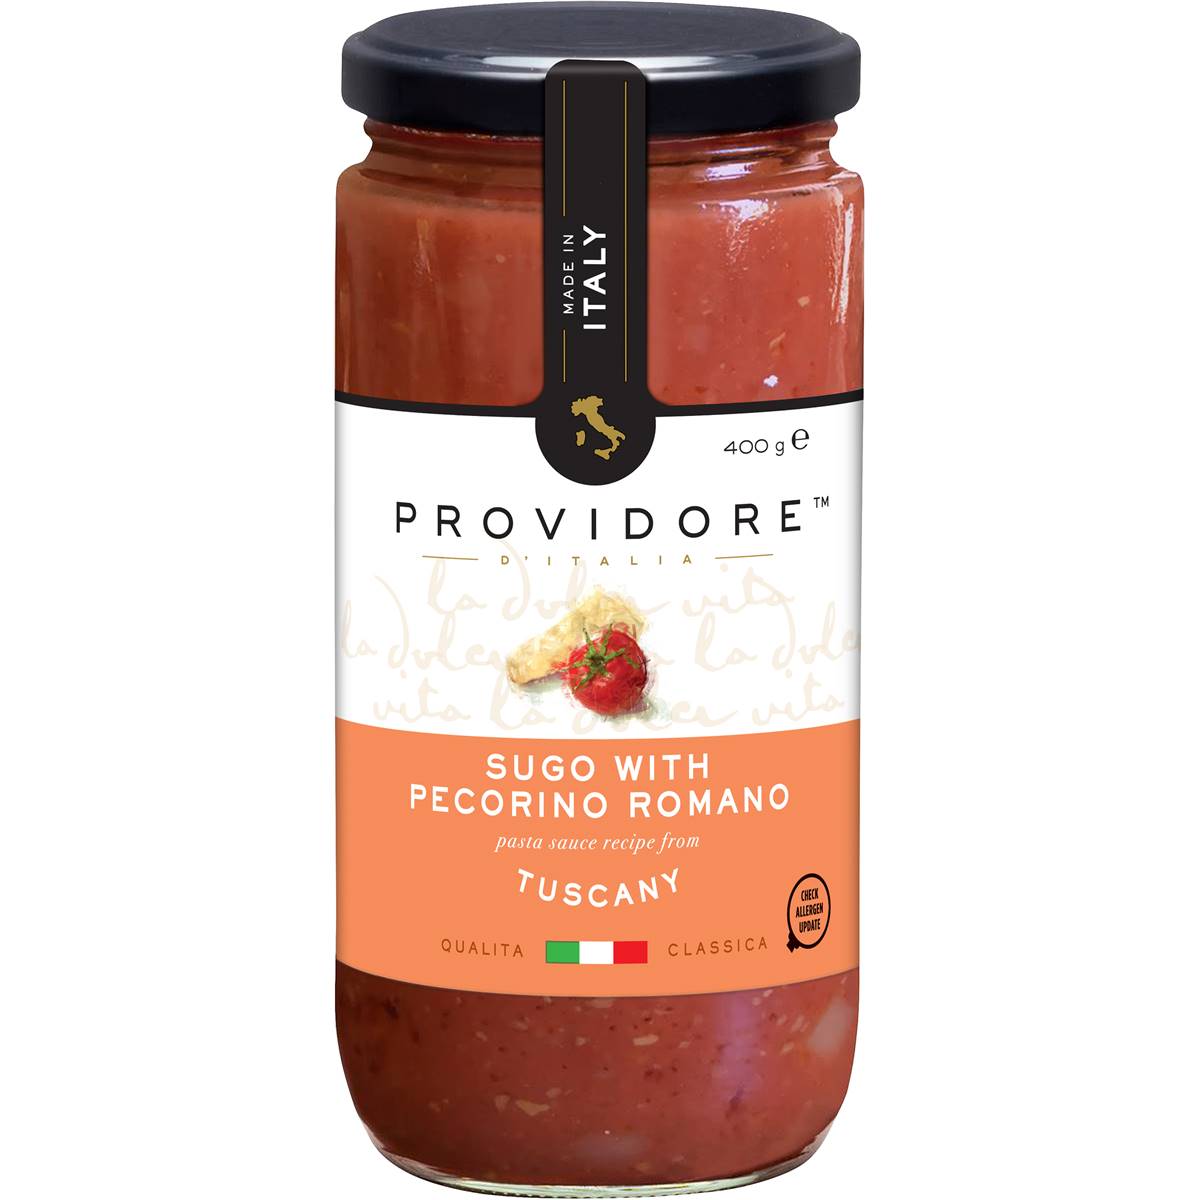 Calories in Leggo's Providore D'italia Sugo With Pecorino Romano Pasta Sauce